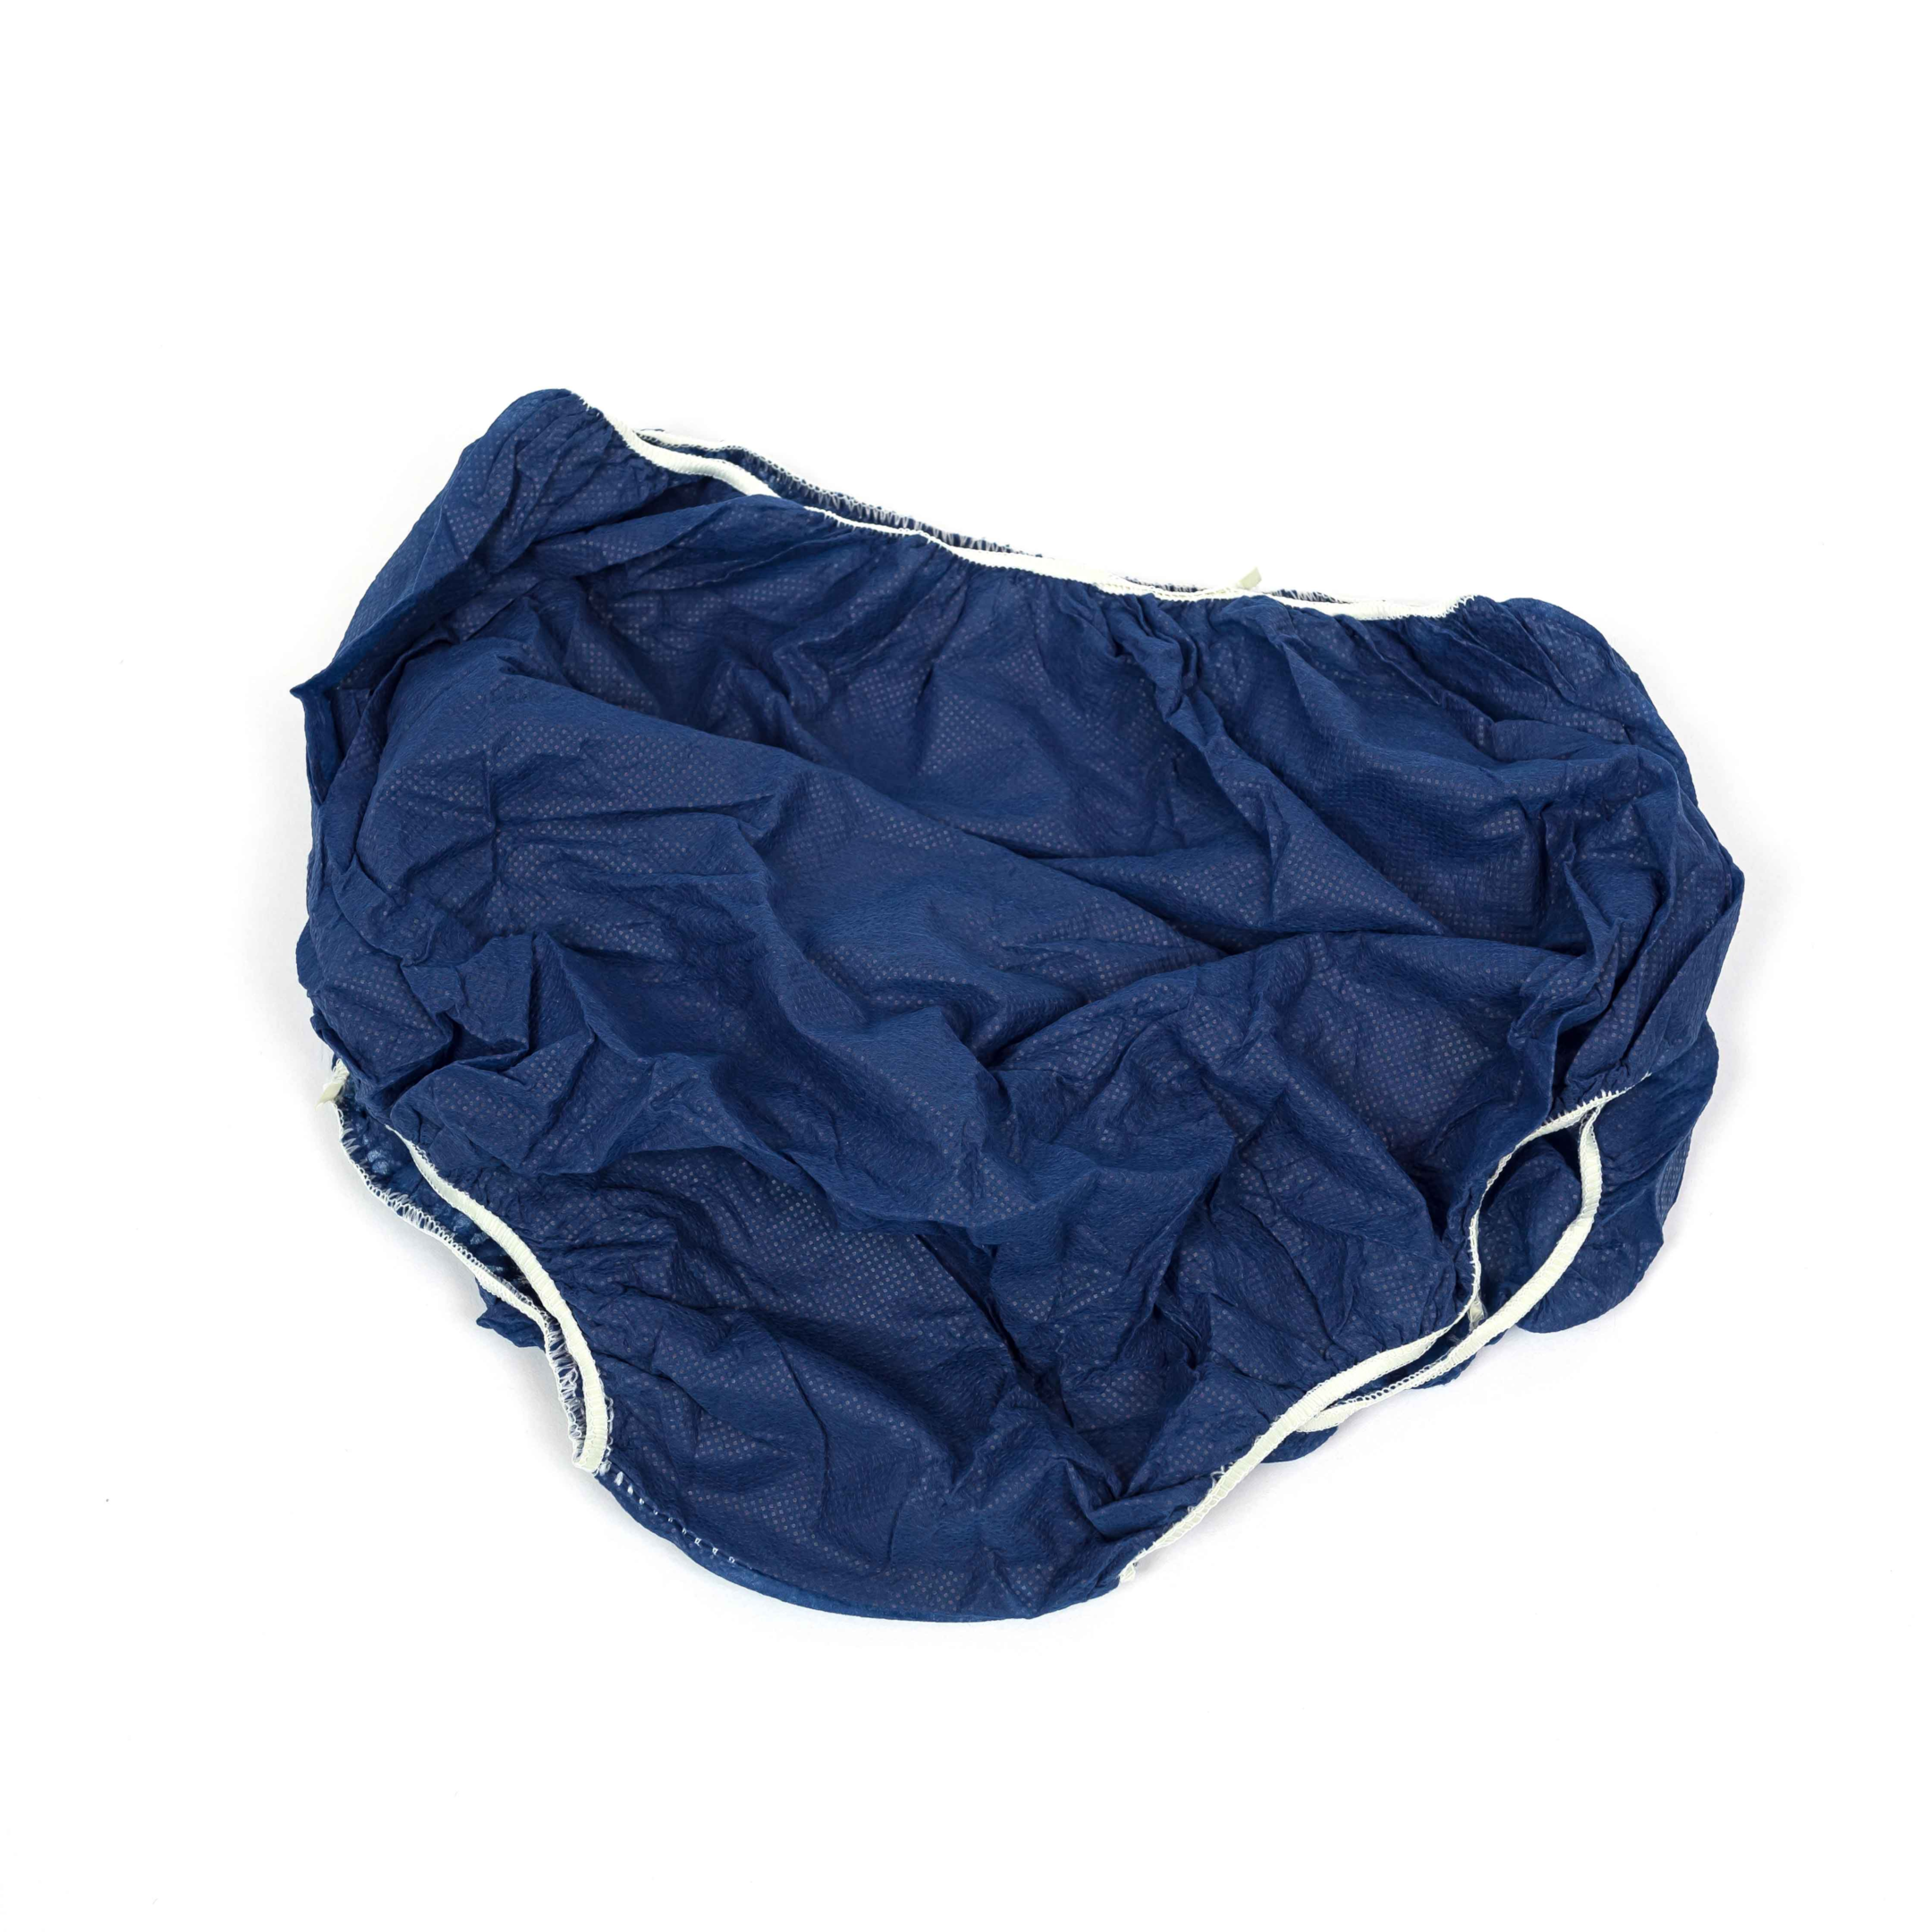 Spa Panties,Underwear For Spa,Wholesale Disposable Underwear